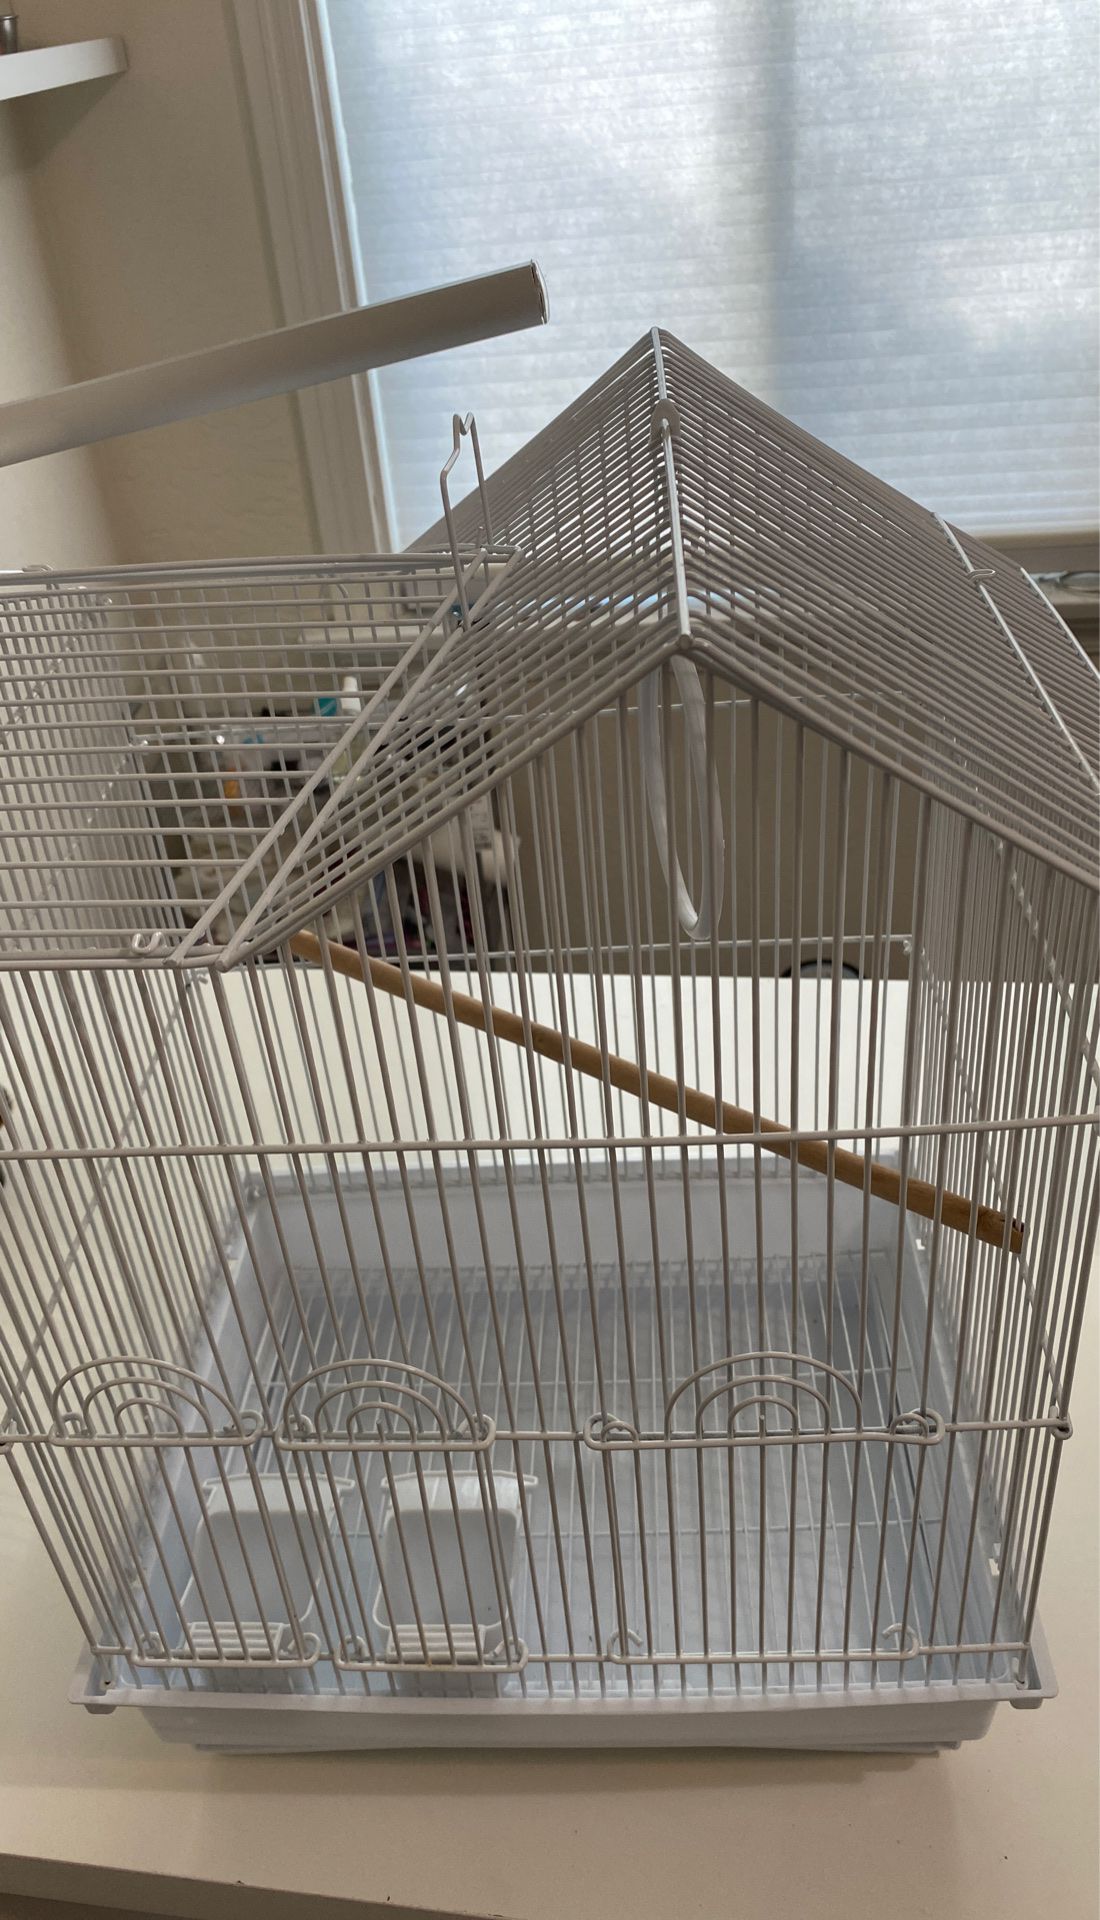 New bird cage